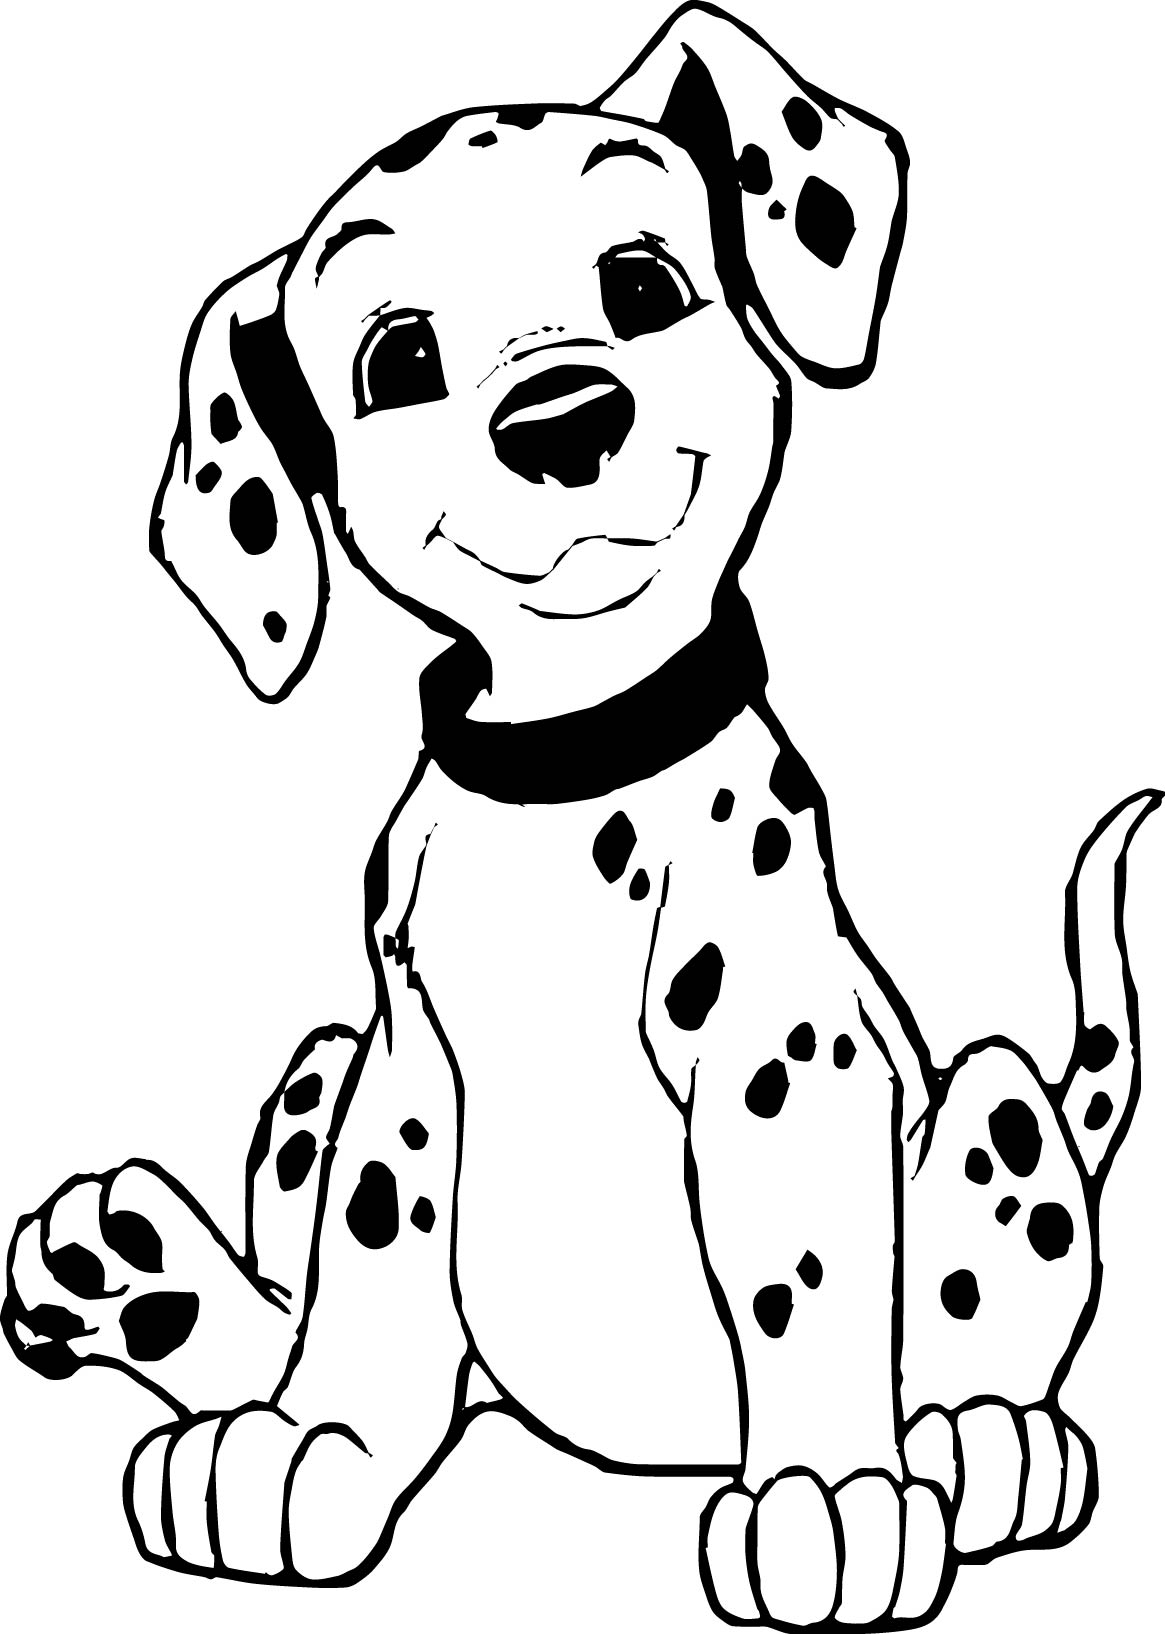 Dalmatian Dog Coloring Page at GetColorings.com | Free printable ...